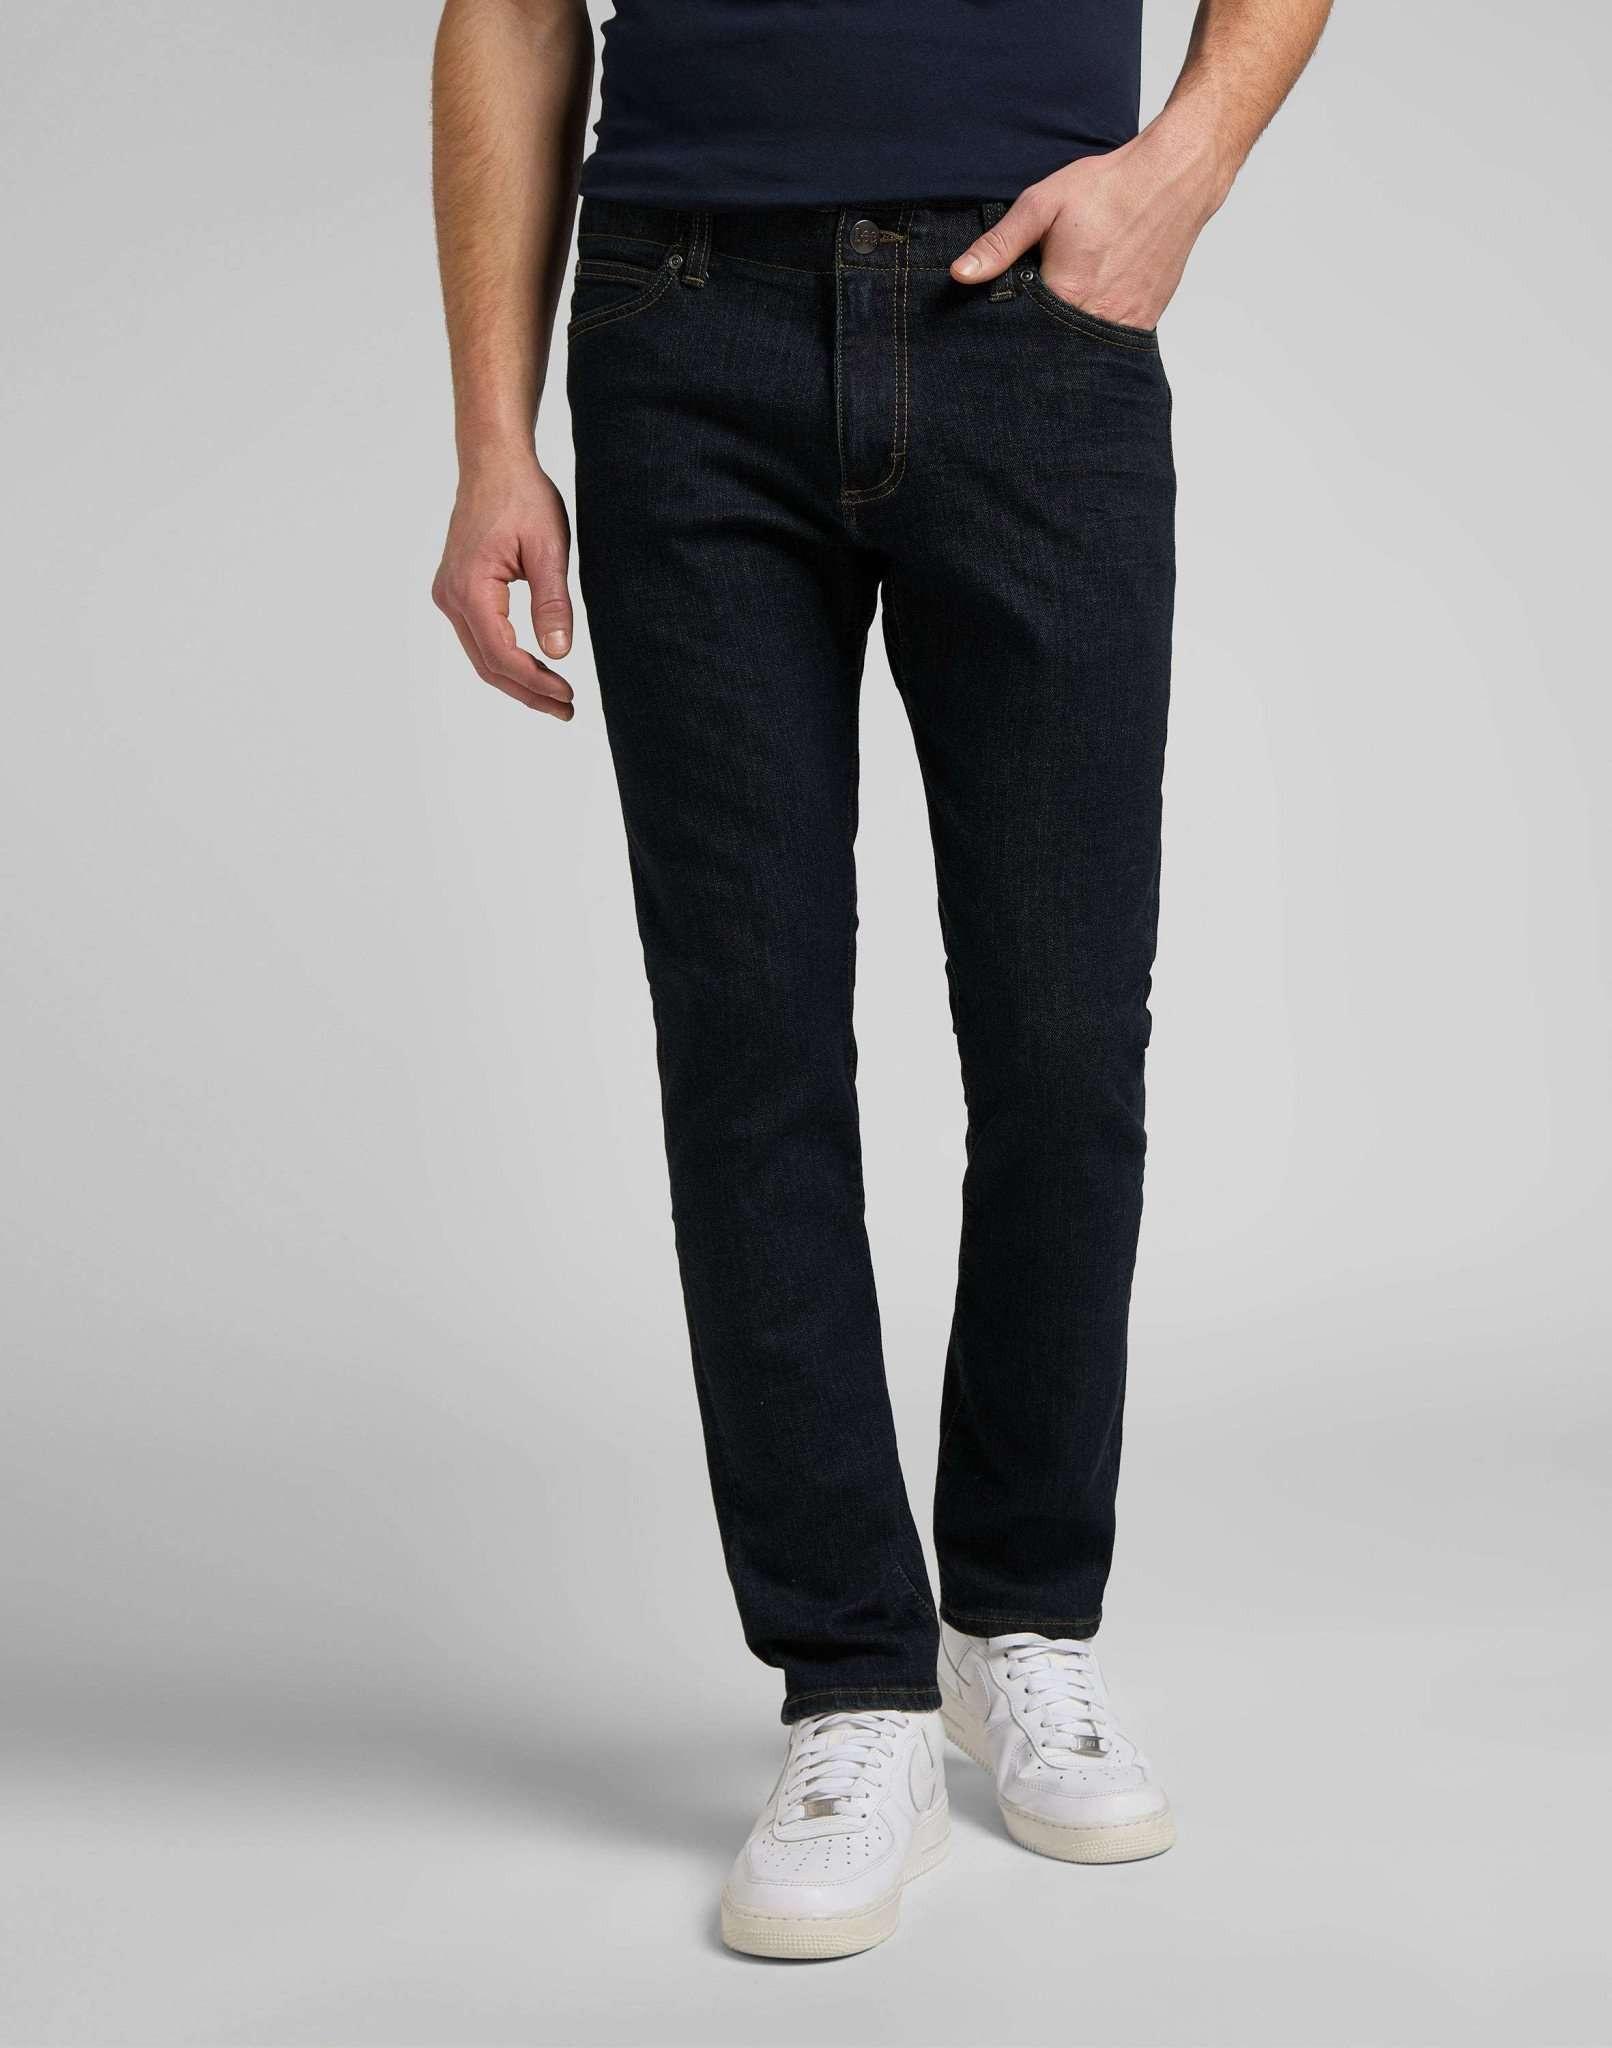 Jeans Skinny Fit Xm Herren Blau Denim L34/W40 von Lee